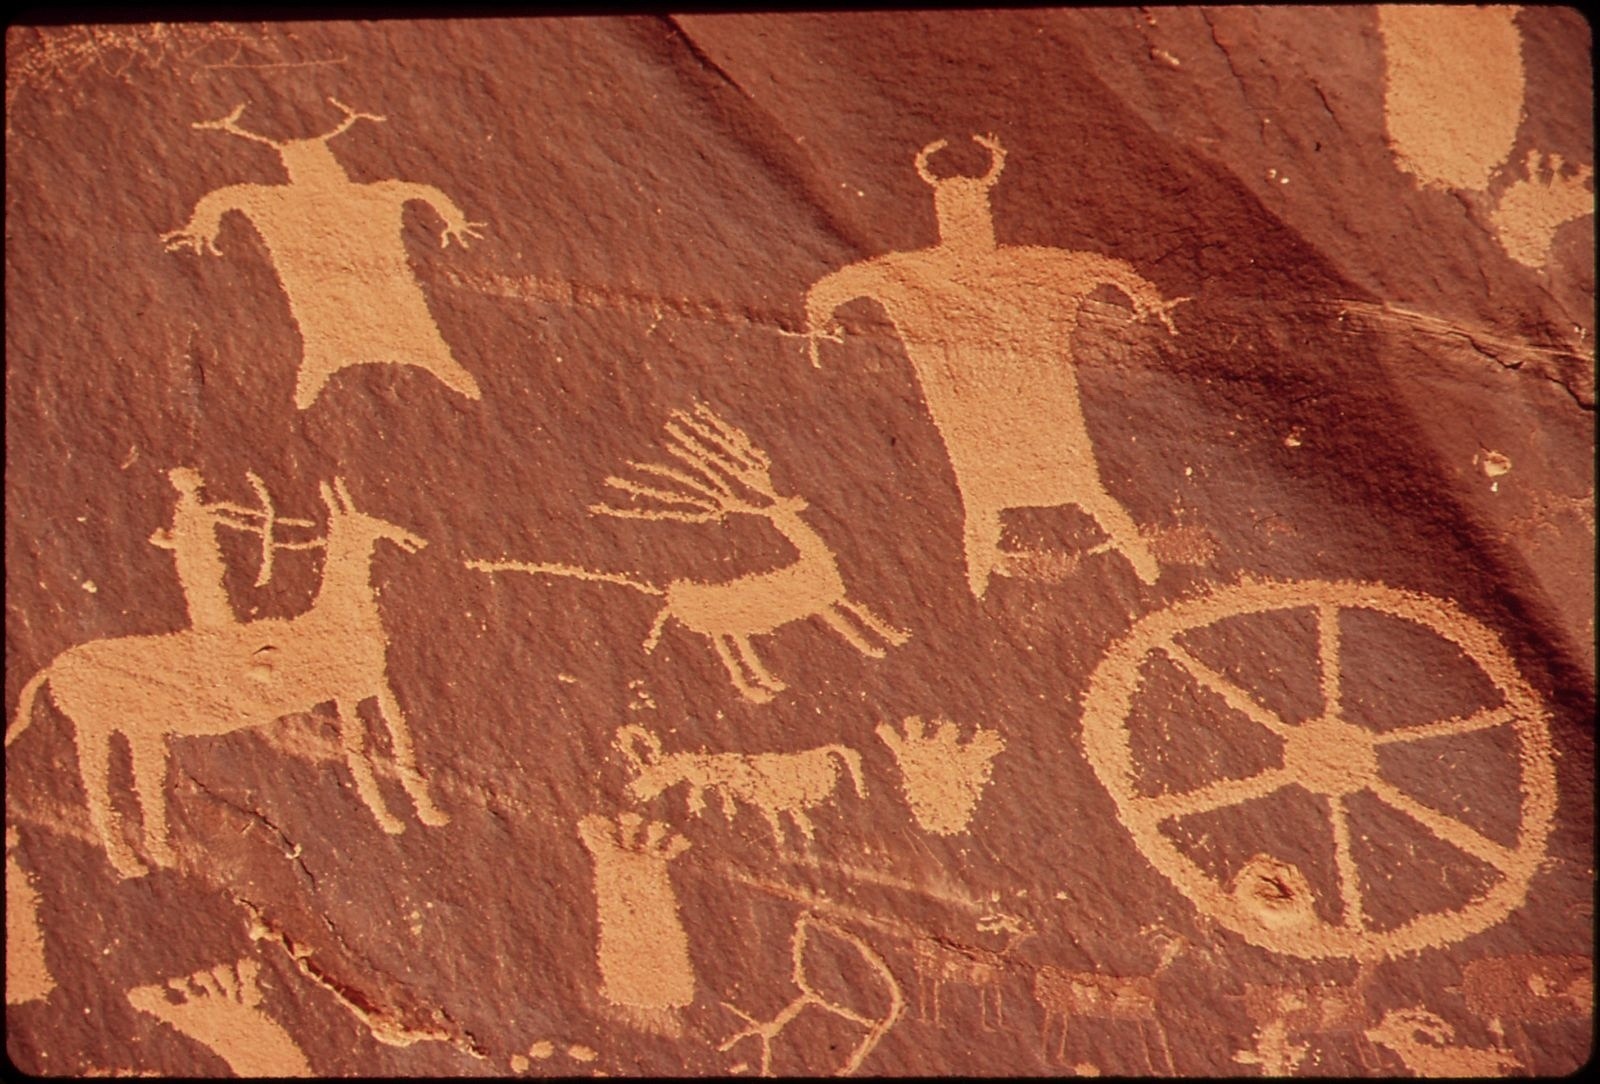 A petroglyph on a cliff face in southern Utah. Photo courtesy David Hiser/US EPA